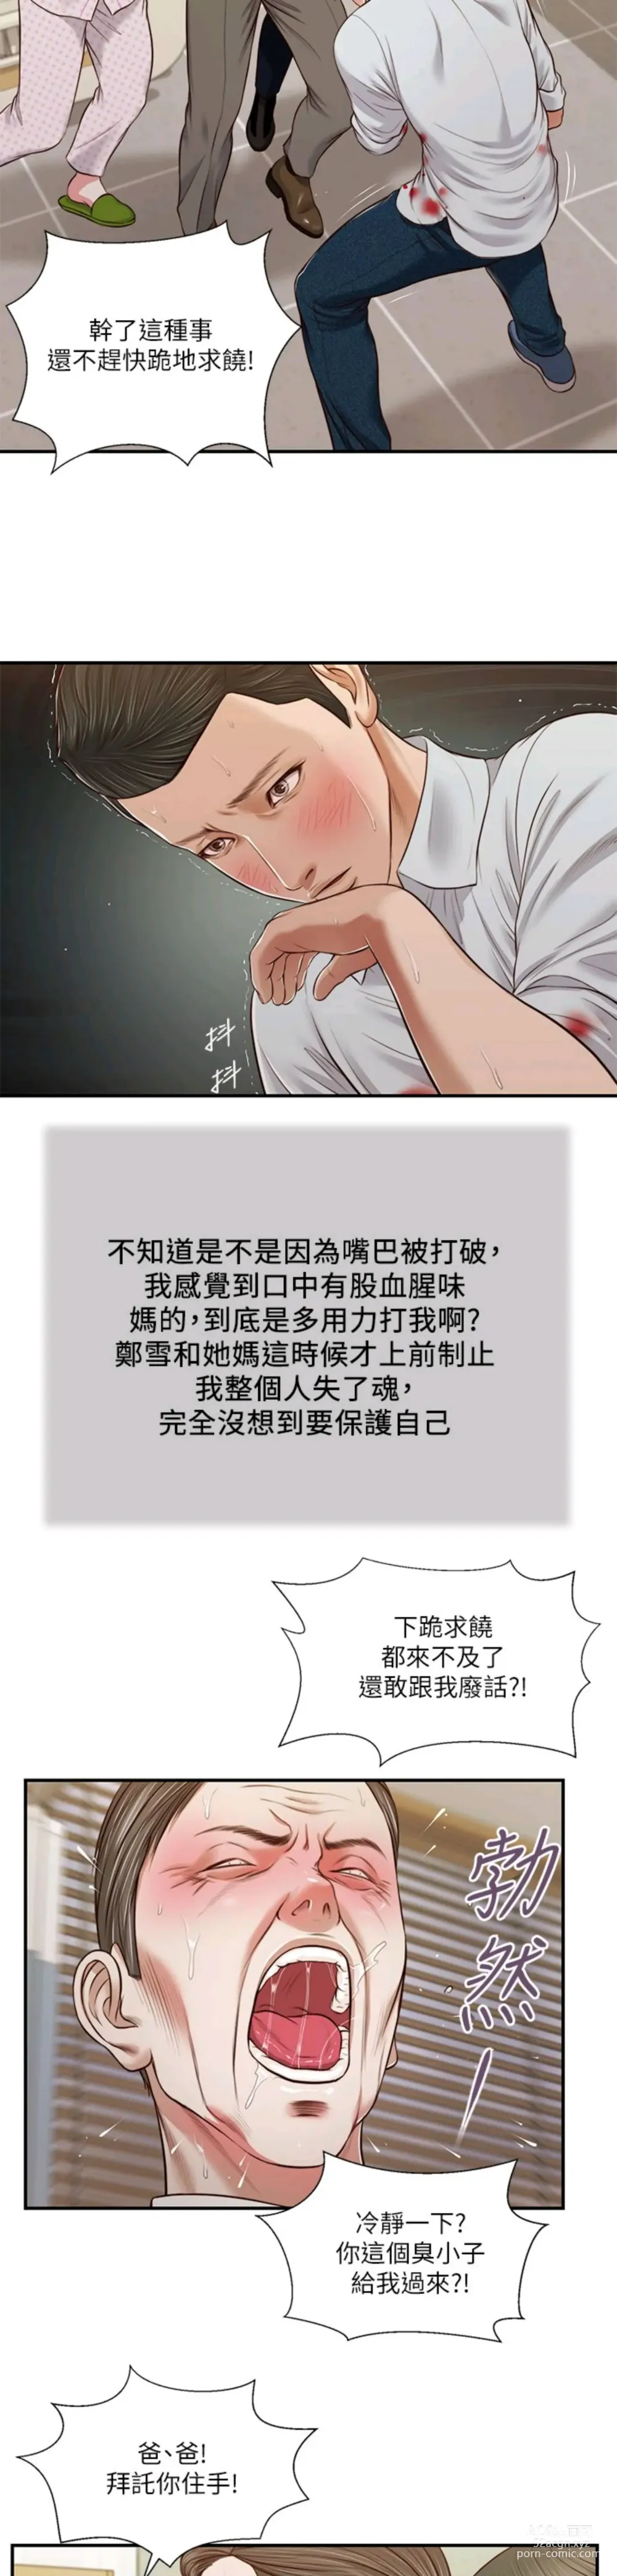 Page 1756 of manga 小妾 1-70话